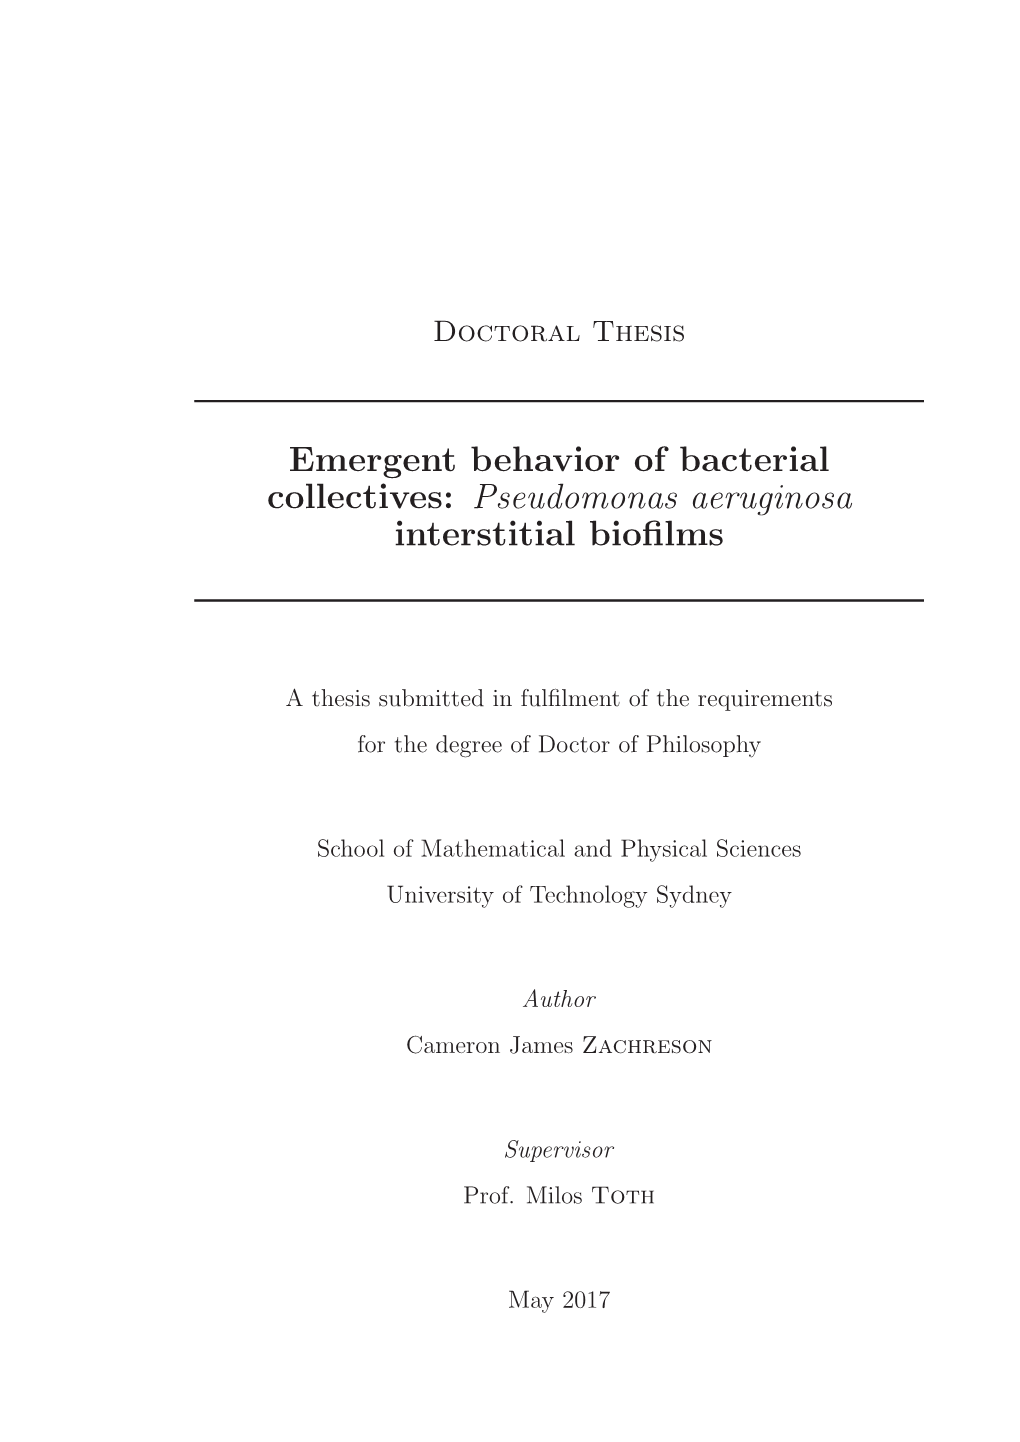 Emergent Behavior of Bacterial Collectives: Pseudomonas Aeruginosa Interstitial Bioﬁlms